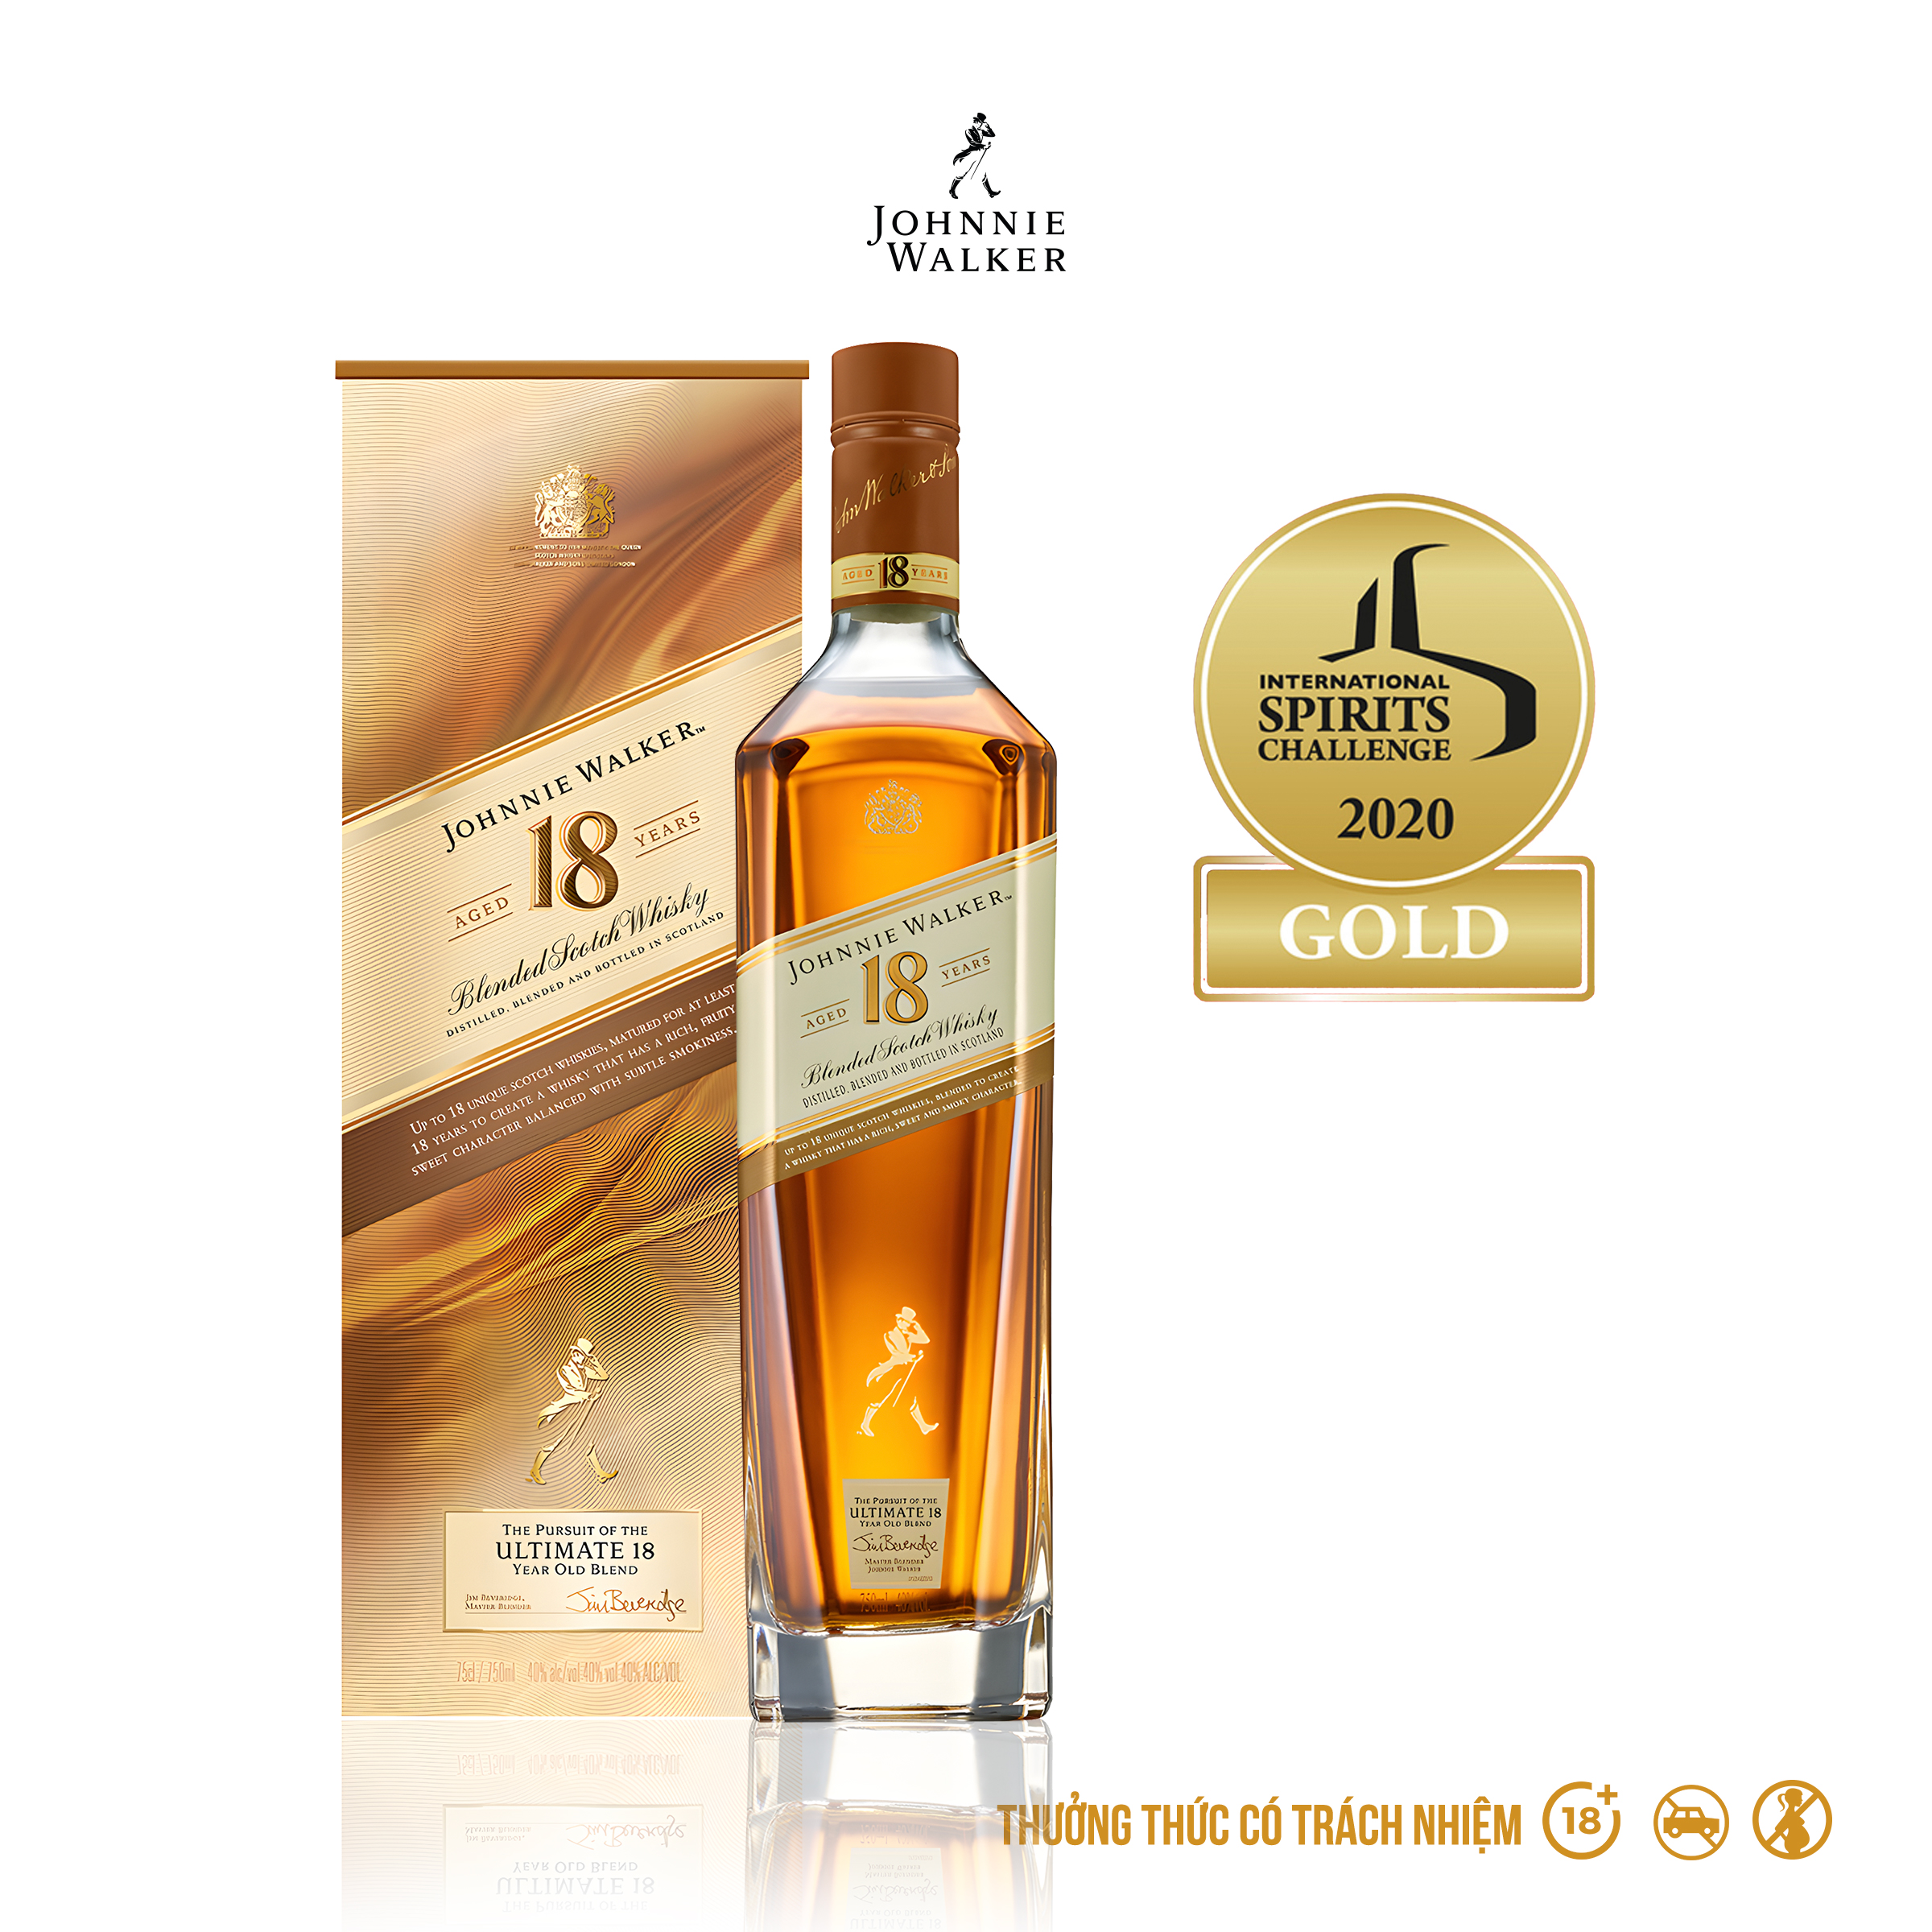 Rượu Johnnie Walker 18 Years Old Blended Scotch Whisky 750ml 40% [Kèm Hộp]